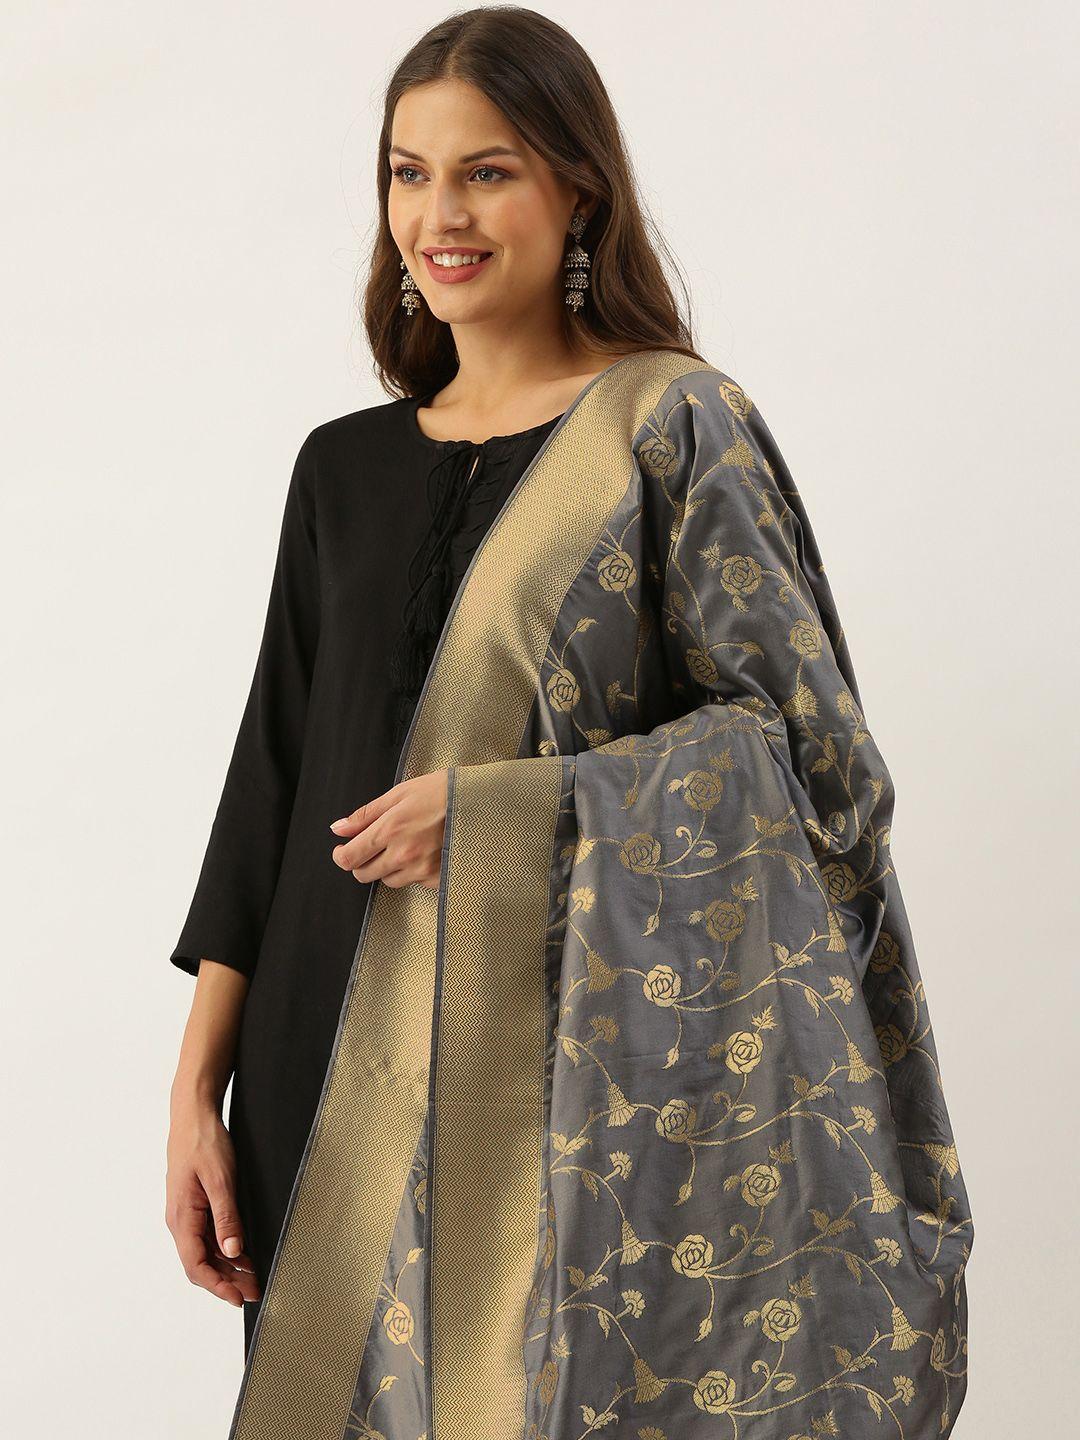 sangam-prints-grey-&-golden--ethnic-motifs-woven-design-dupatta-with-tassel-border